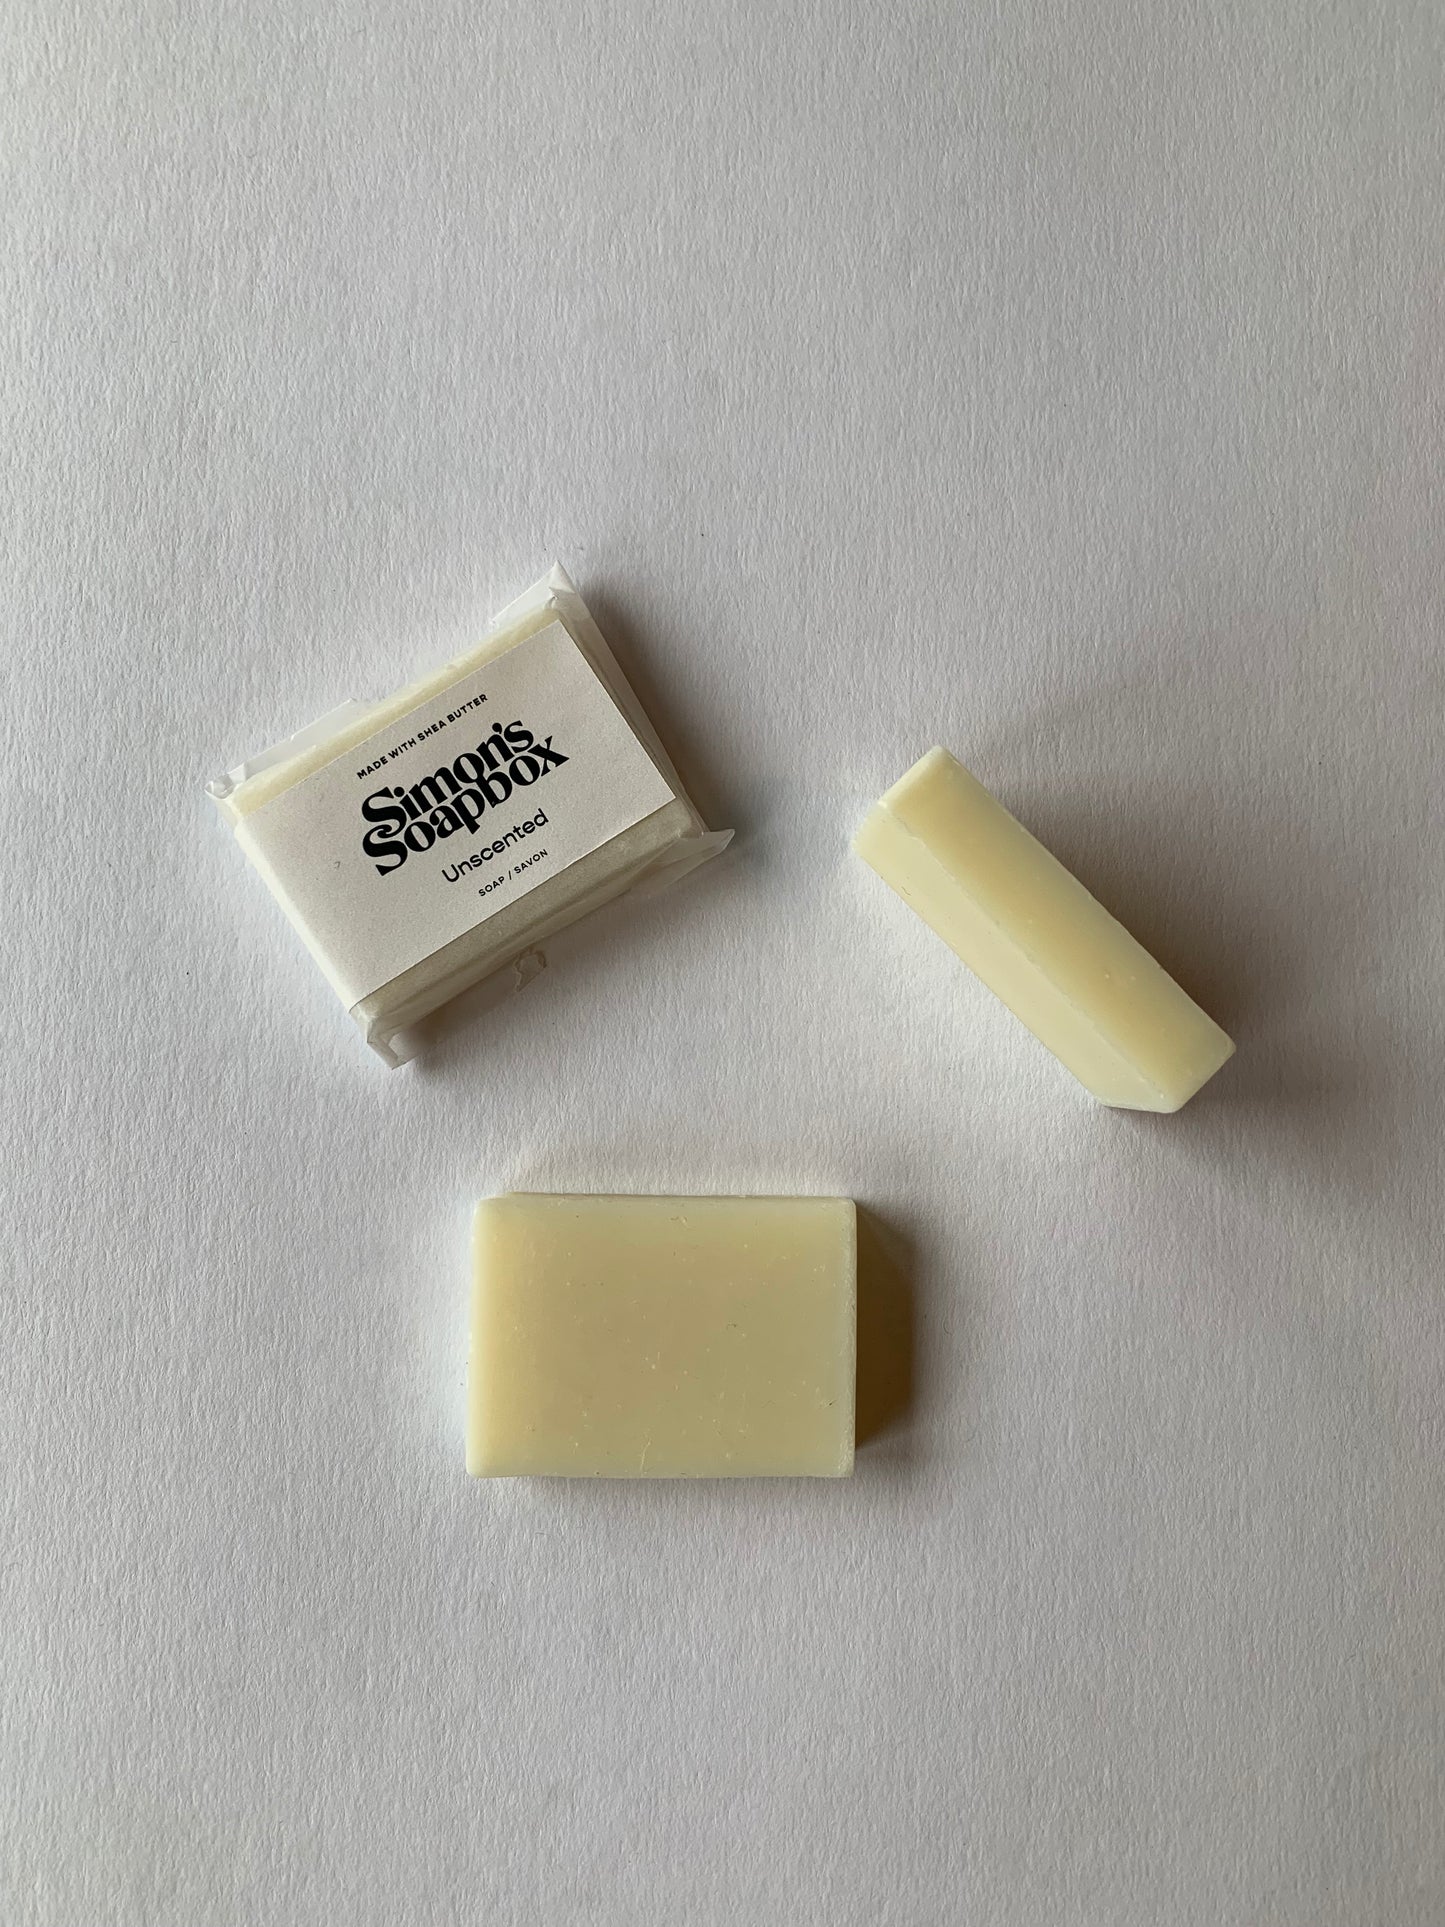 Mini bar of soap (hotel size)